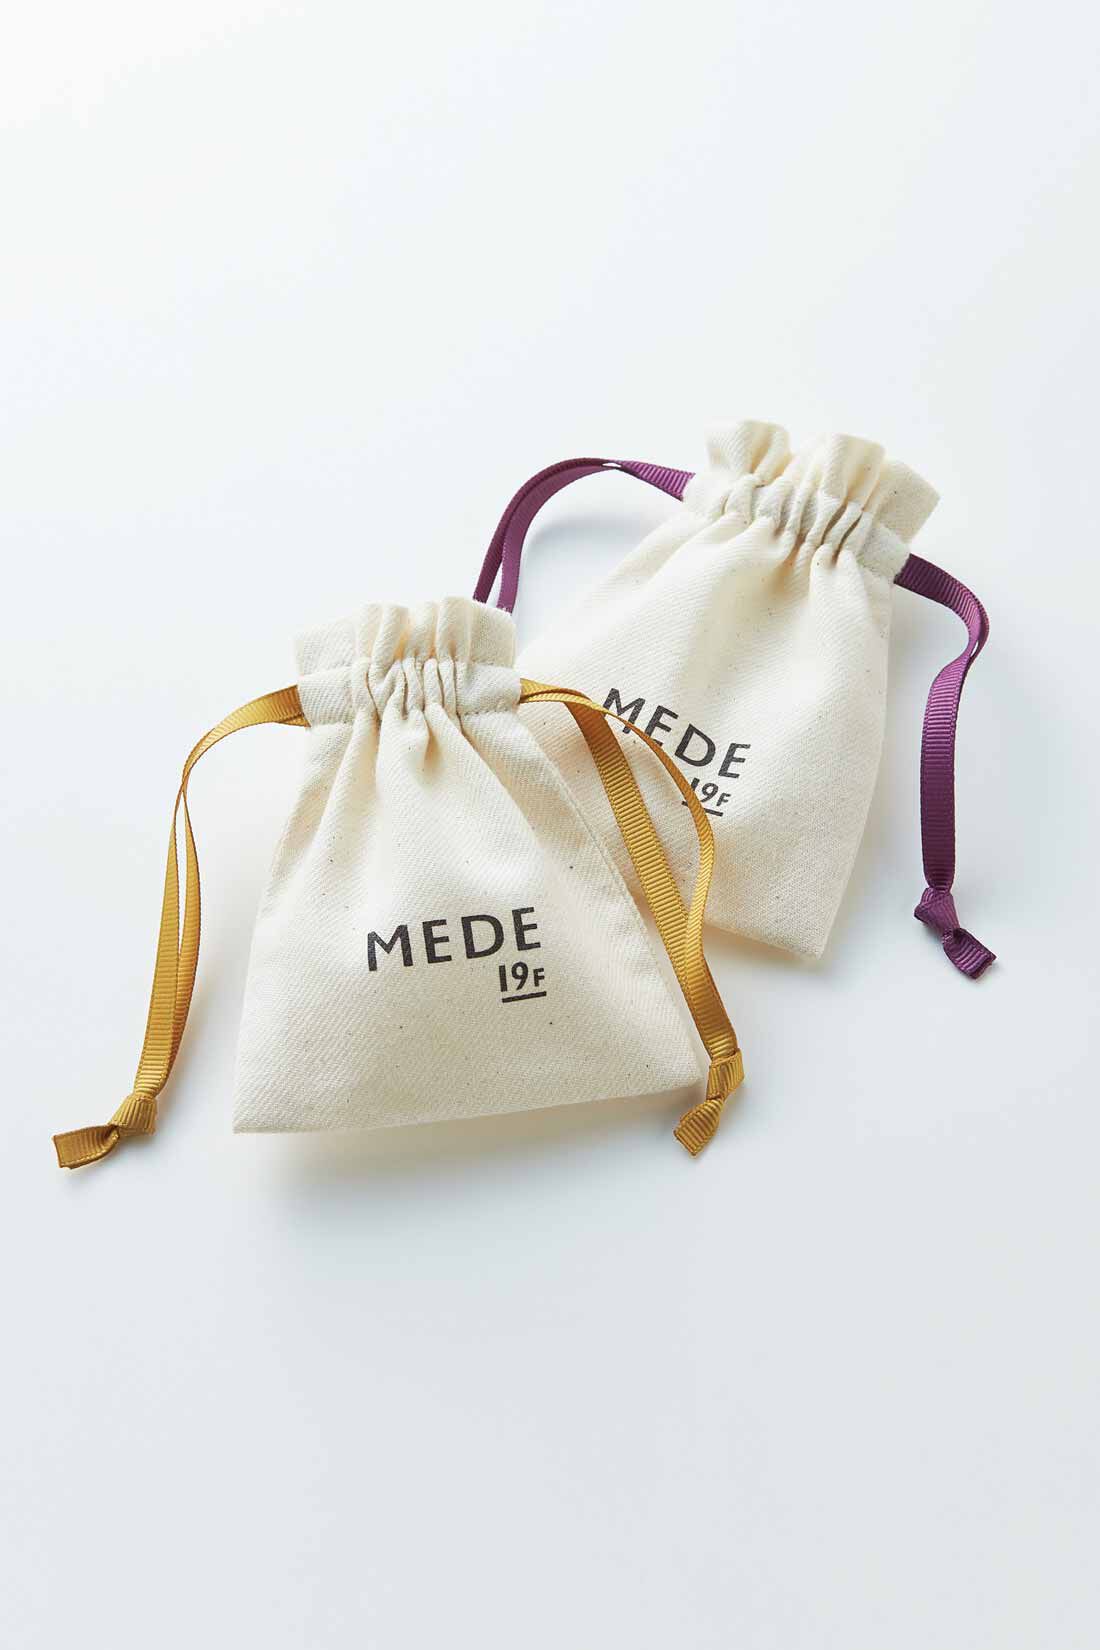 MEDE19F|YPAC for MEDE19F　フランス製陶器ボタンイヤリング type.05|MEDE19Fオリジナルきんちゃくに入れてお届けします。